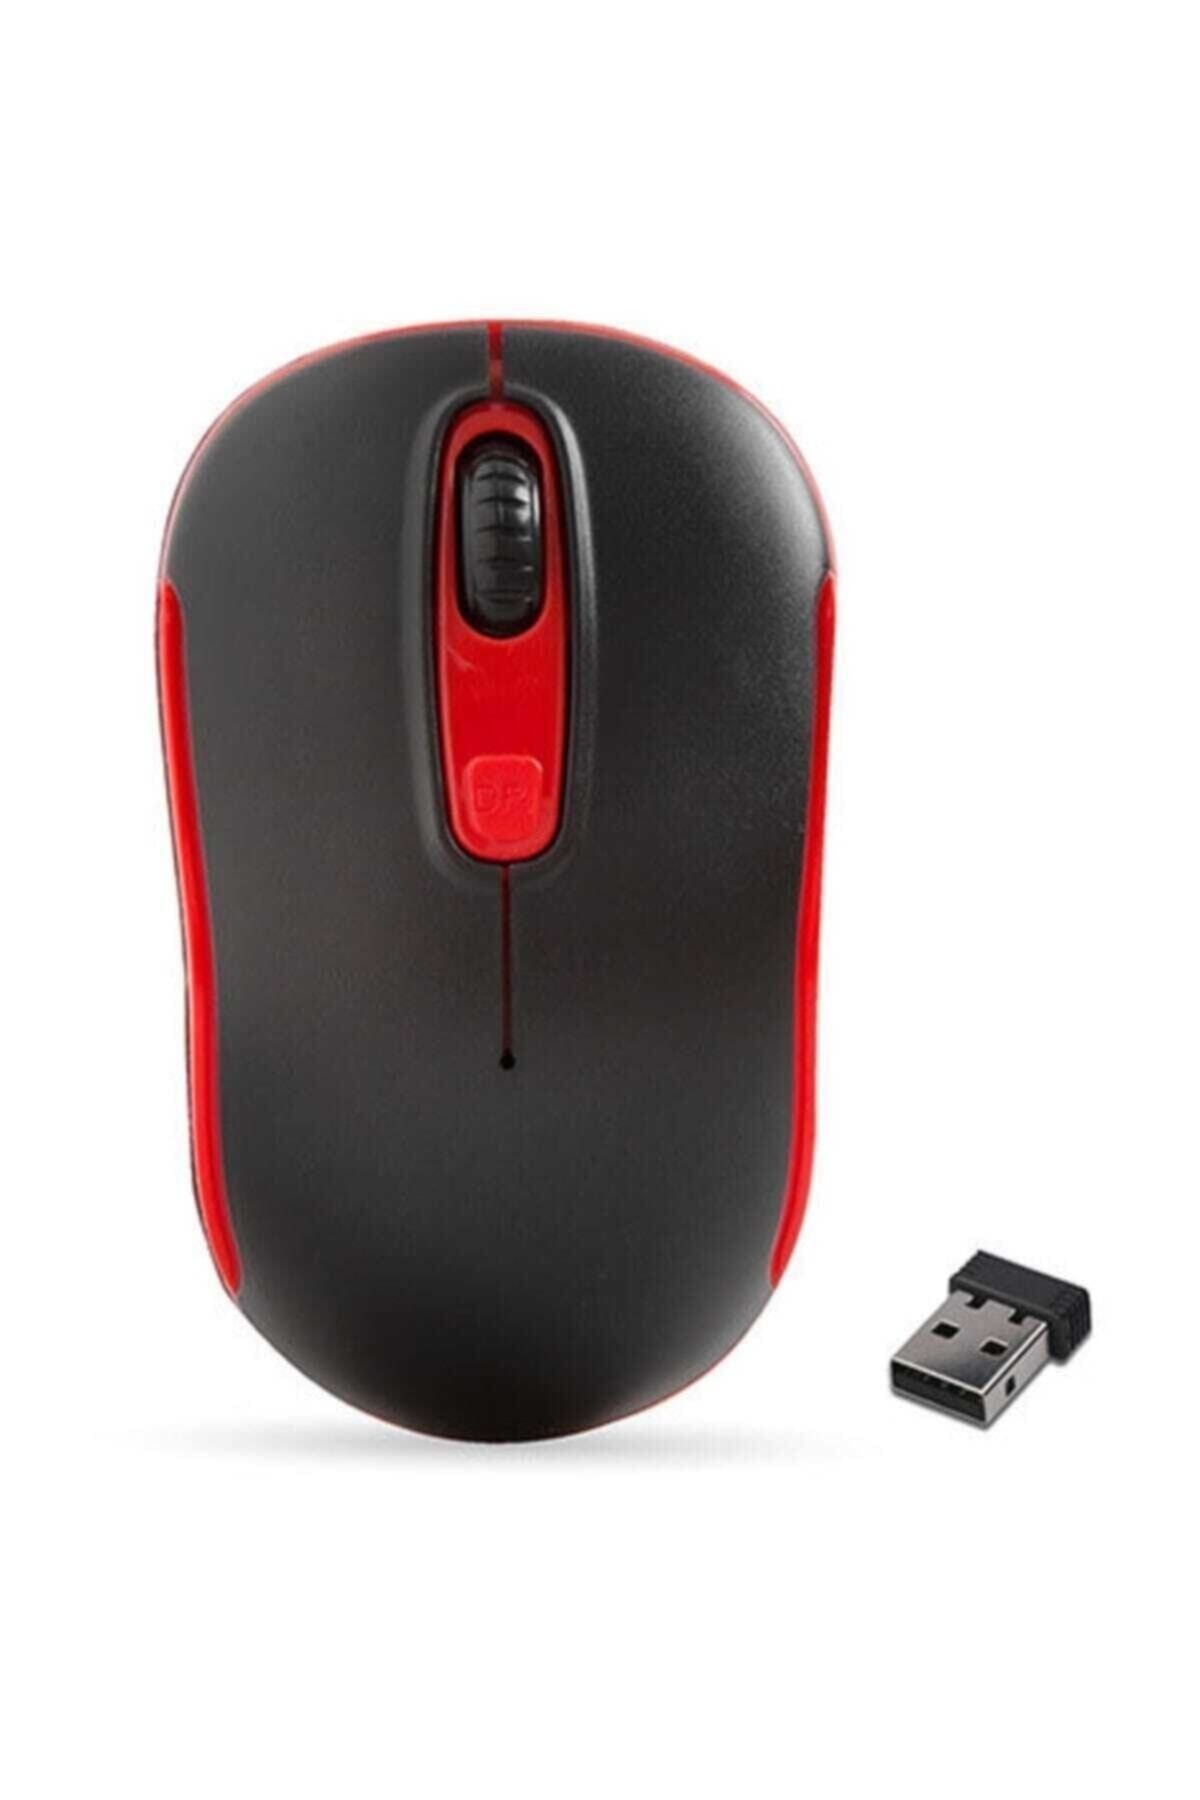 Everest Sm-804 Usb Siyah-kırmızı 800-1200-1600dpi Kablosuz Mouse